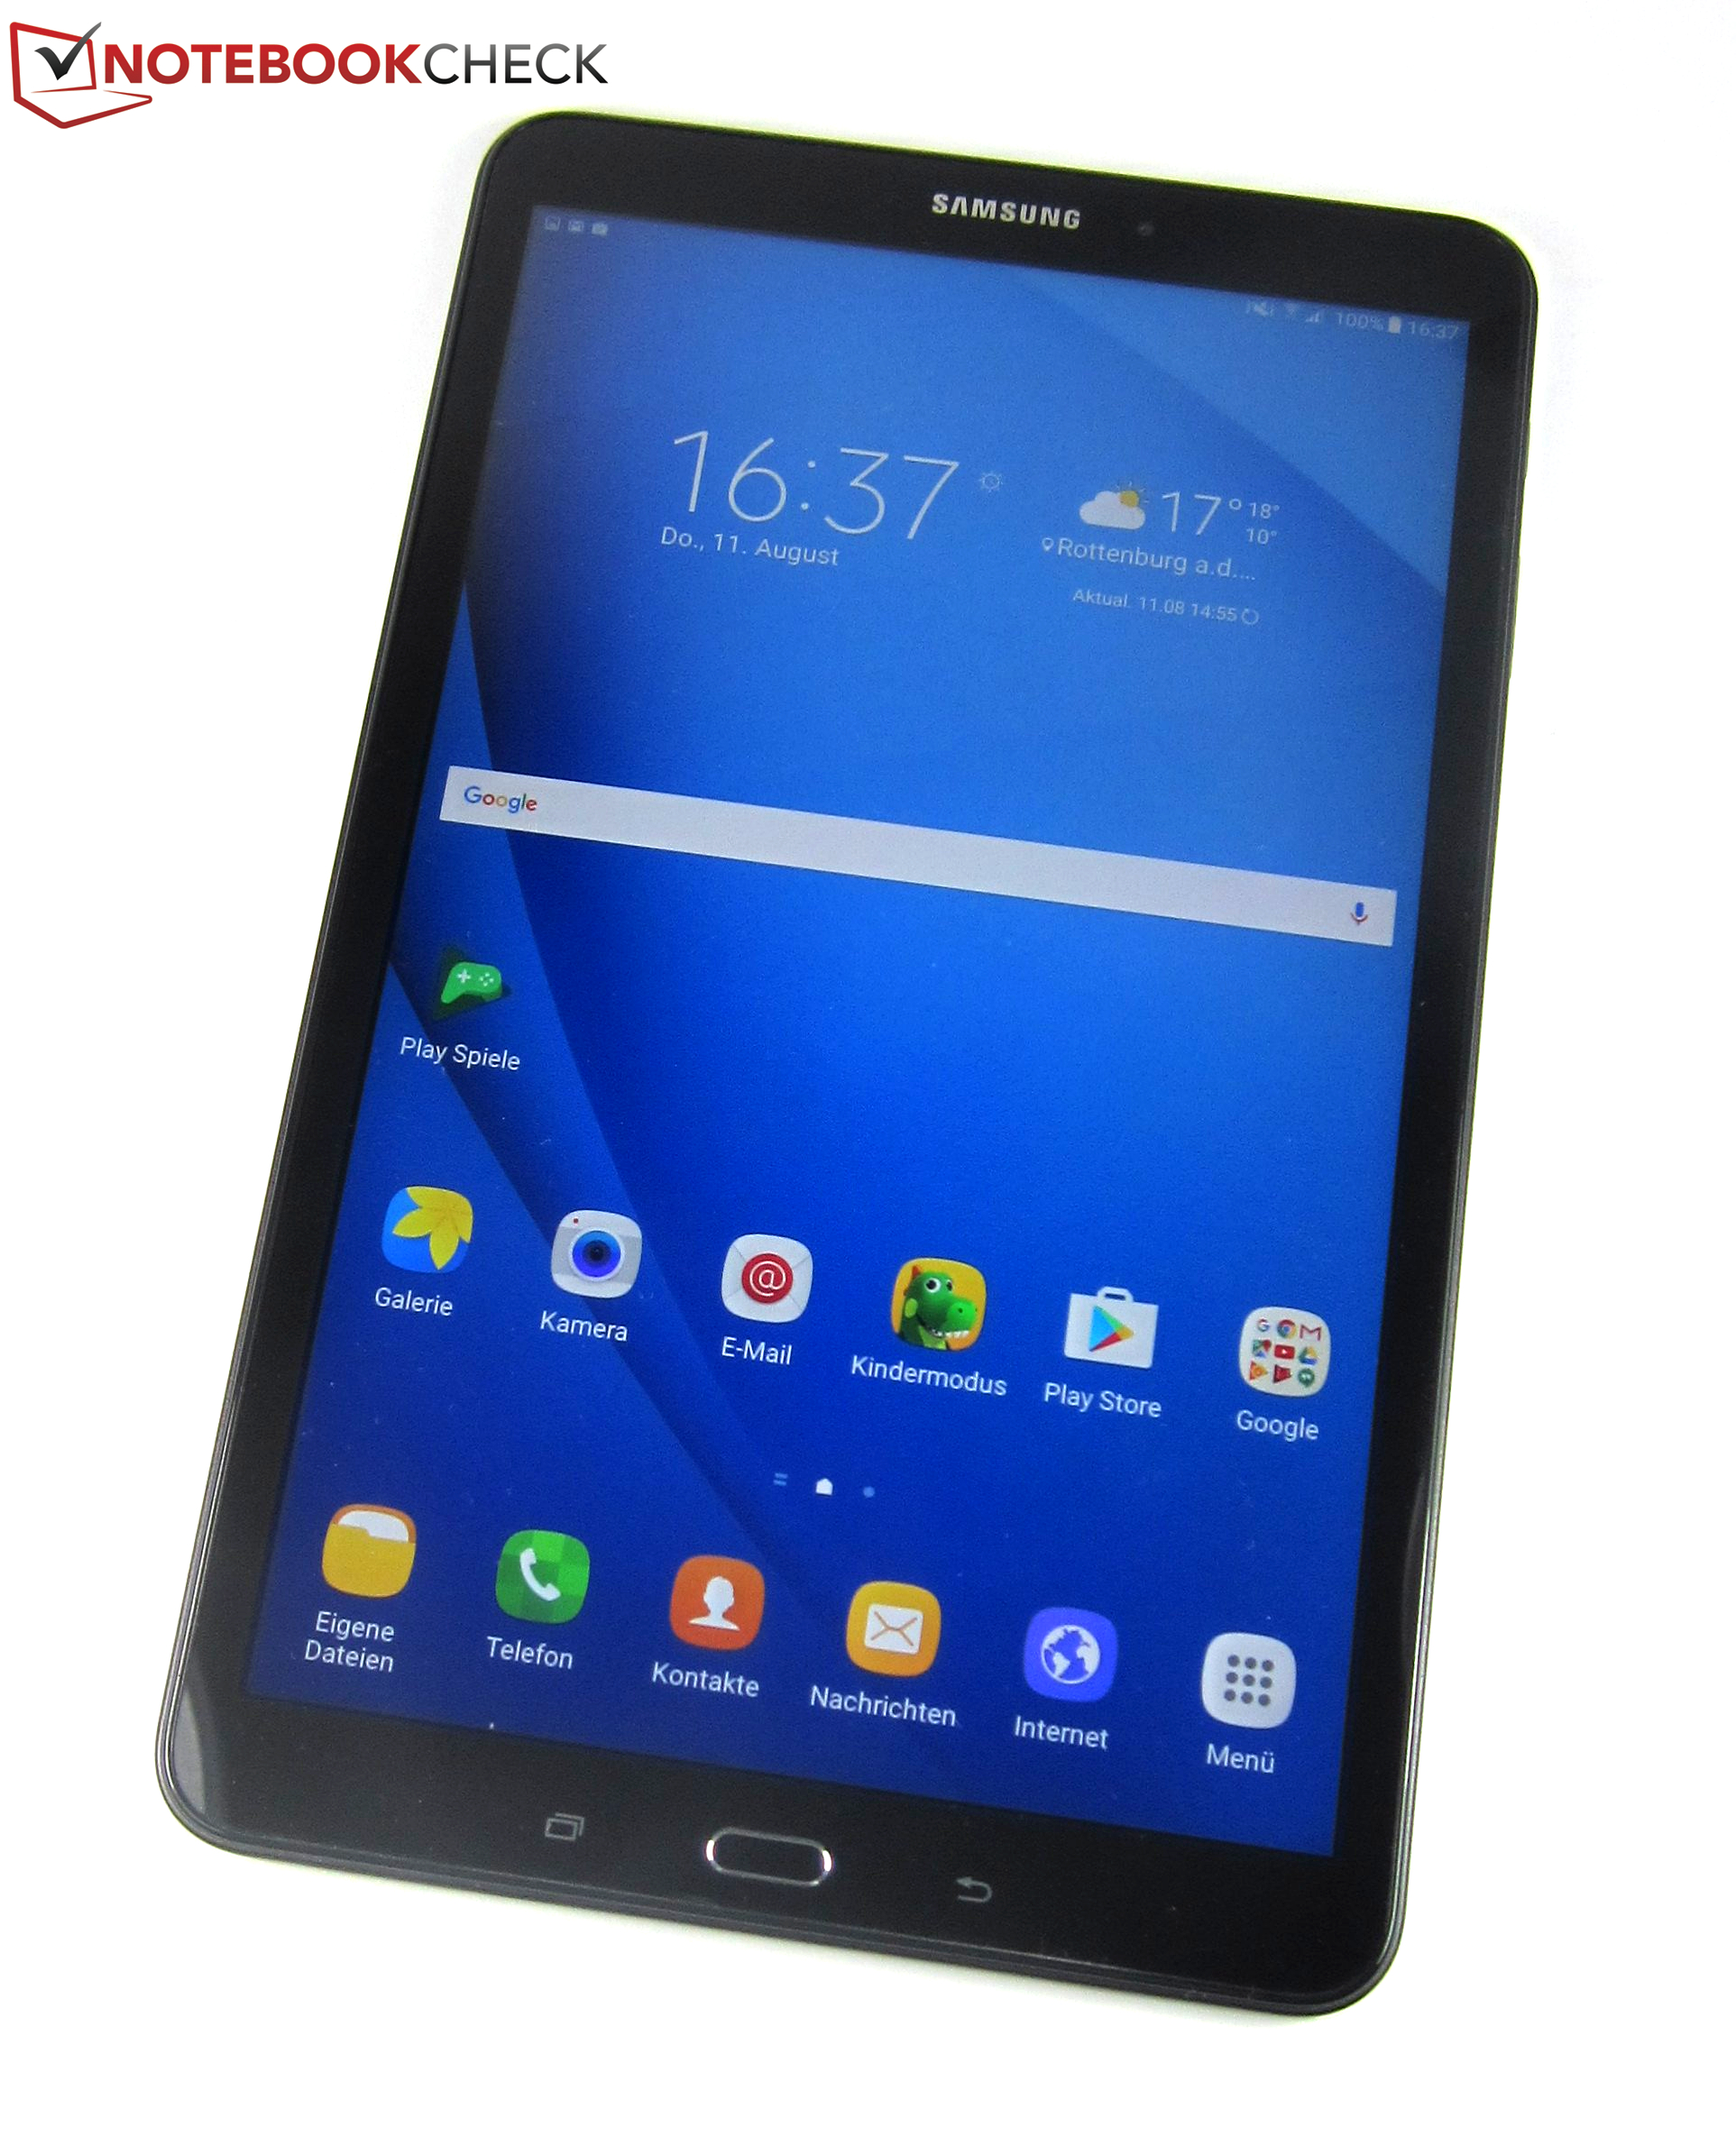 Oude tijden voetstappen Matroos Samsung Galaxy Tab A 10.1 (2016) Tablet Review - NotebookCheck.net Reviews